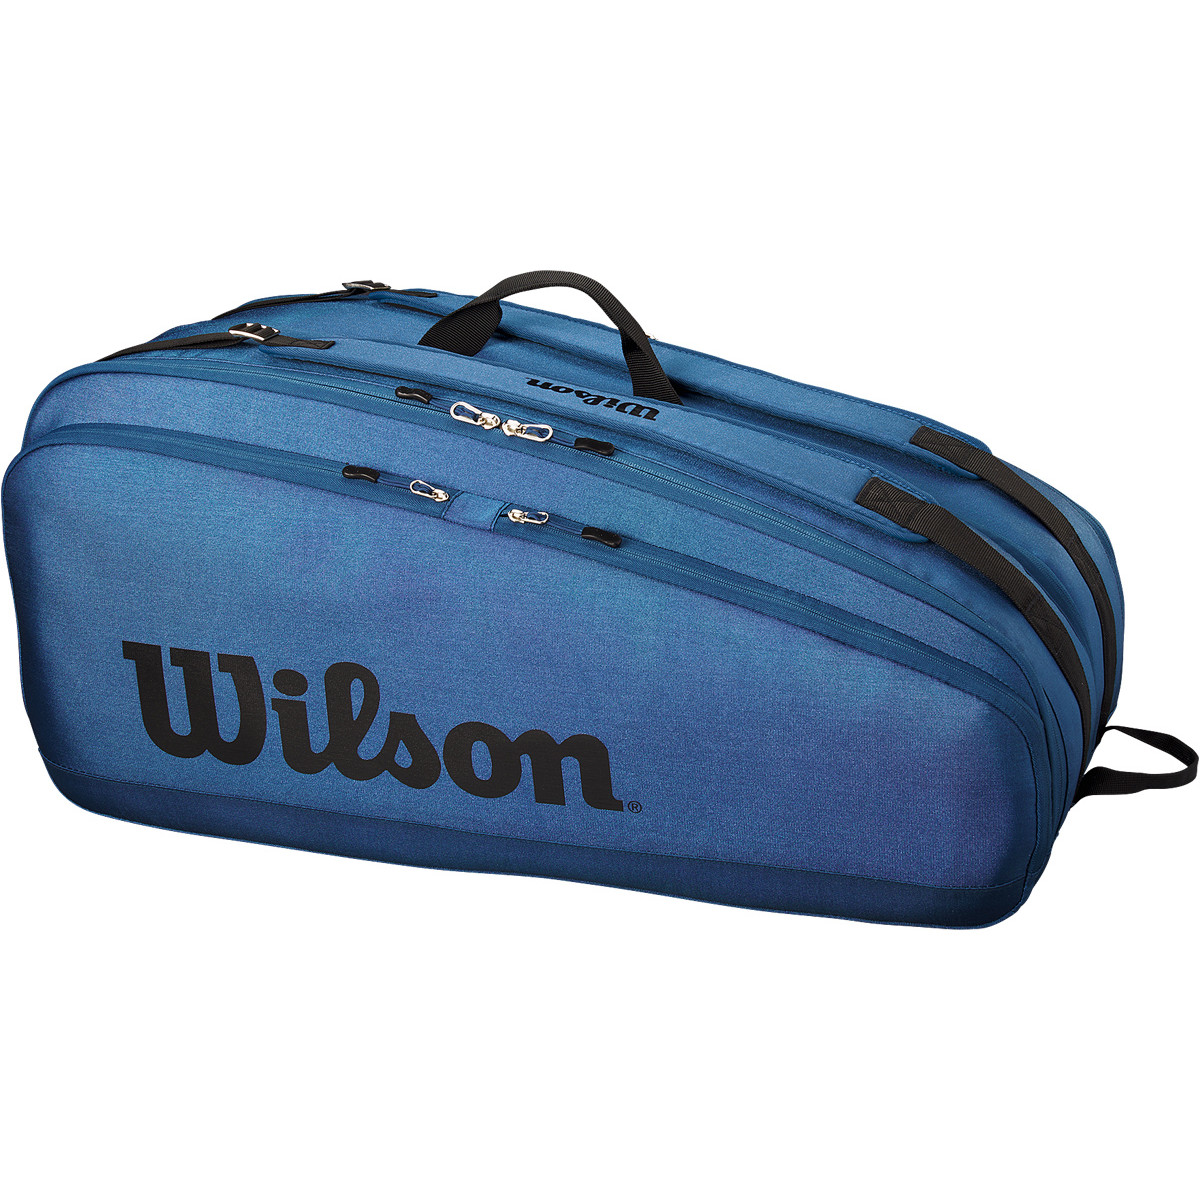  WILSON Blade V8 Super Tour Tennis Racket Bag - 9 Pack, Green :  Sports & Outdoors